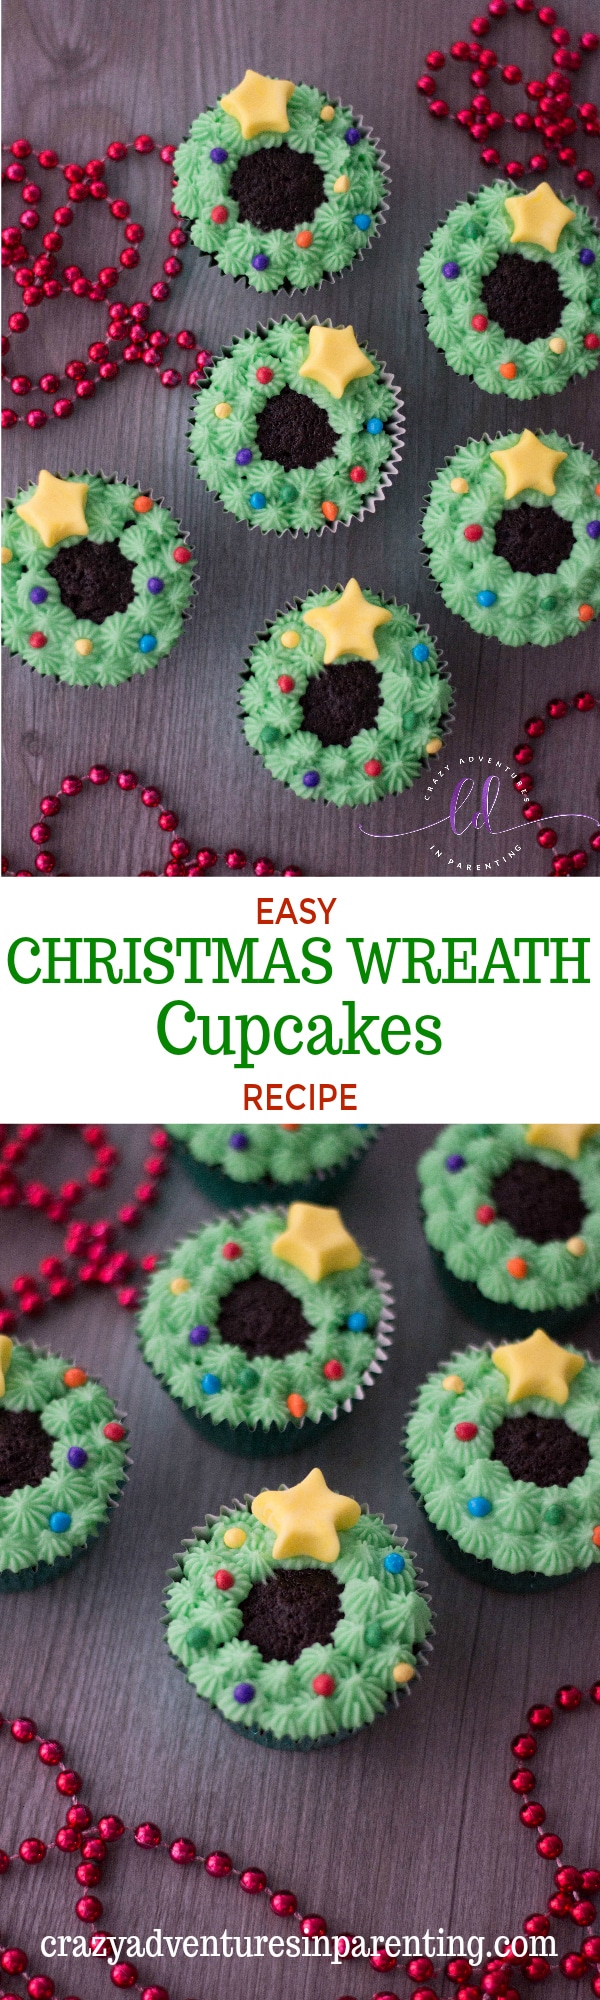 Easy Christmas Wreath Cupcakes Recipe